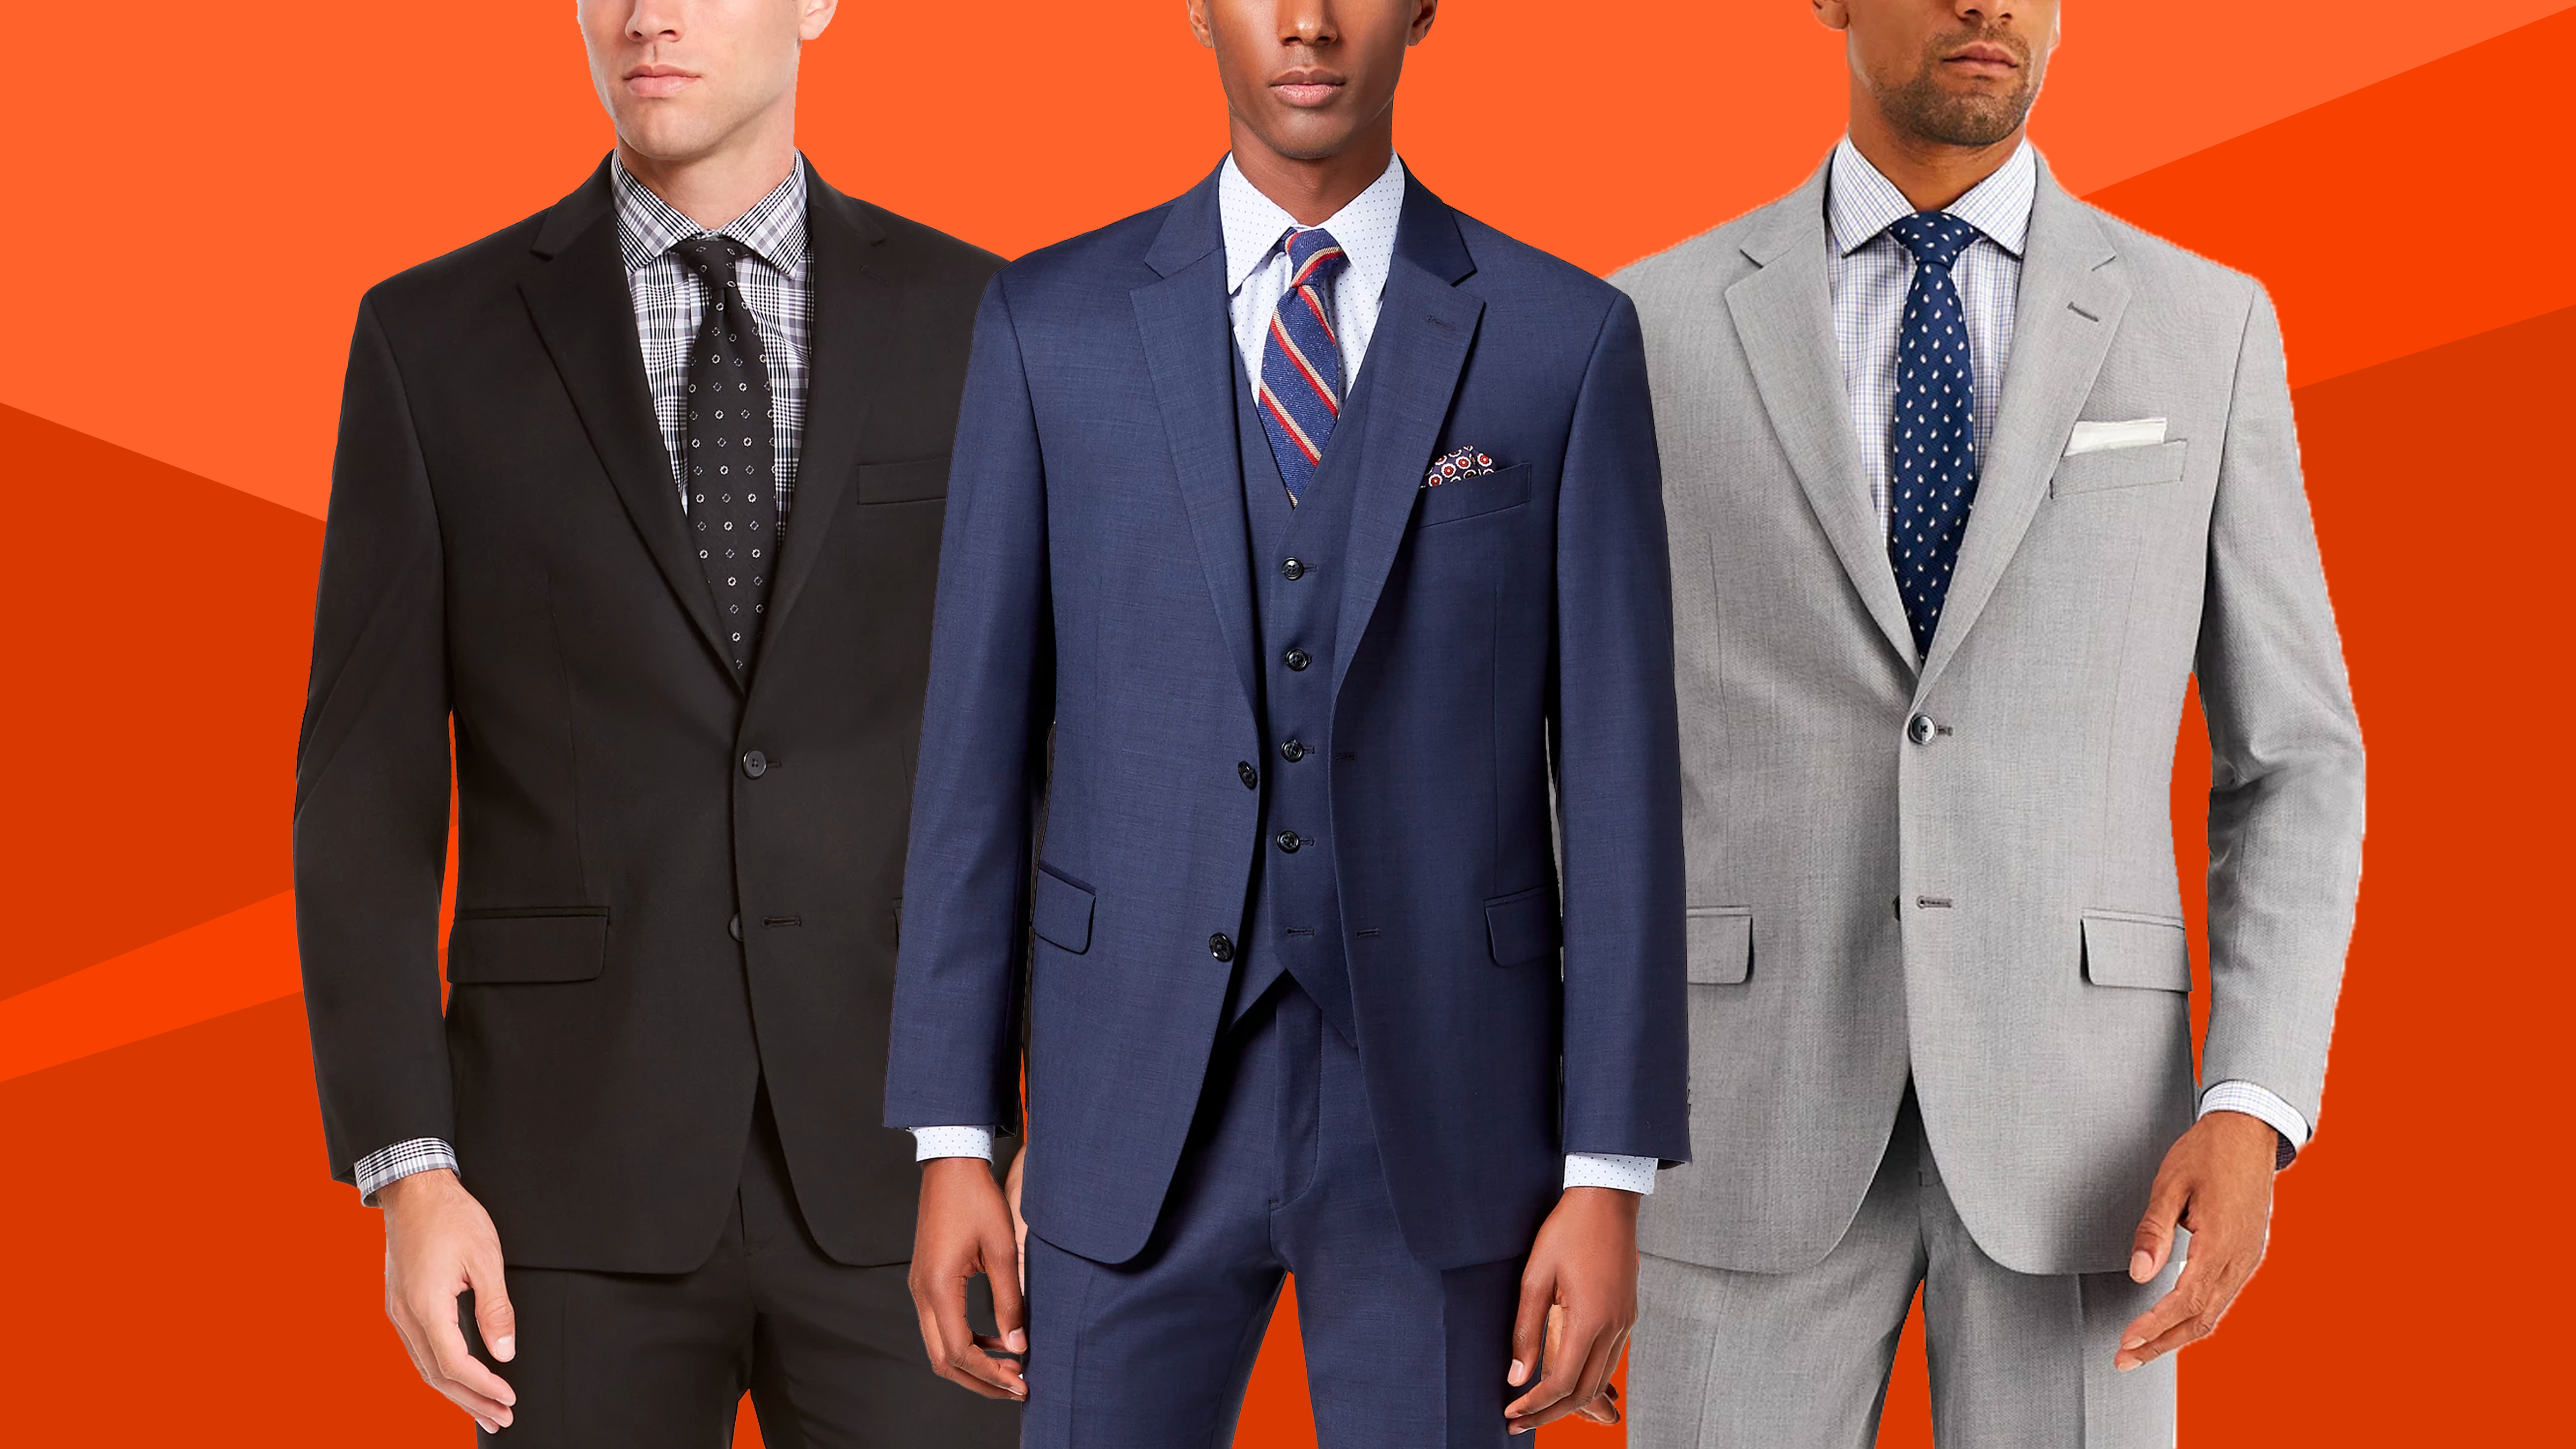 Macy's sale: Save on men's suits ahead of wedding season 2022